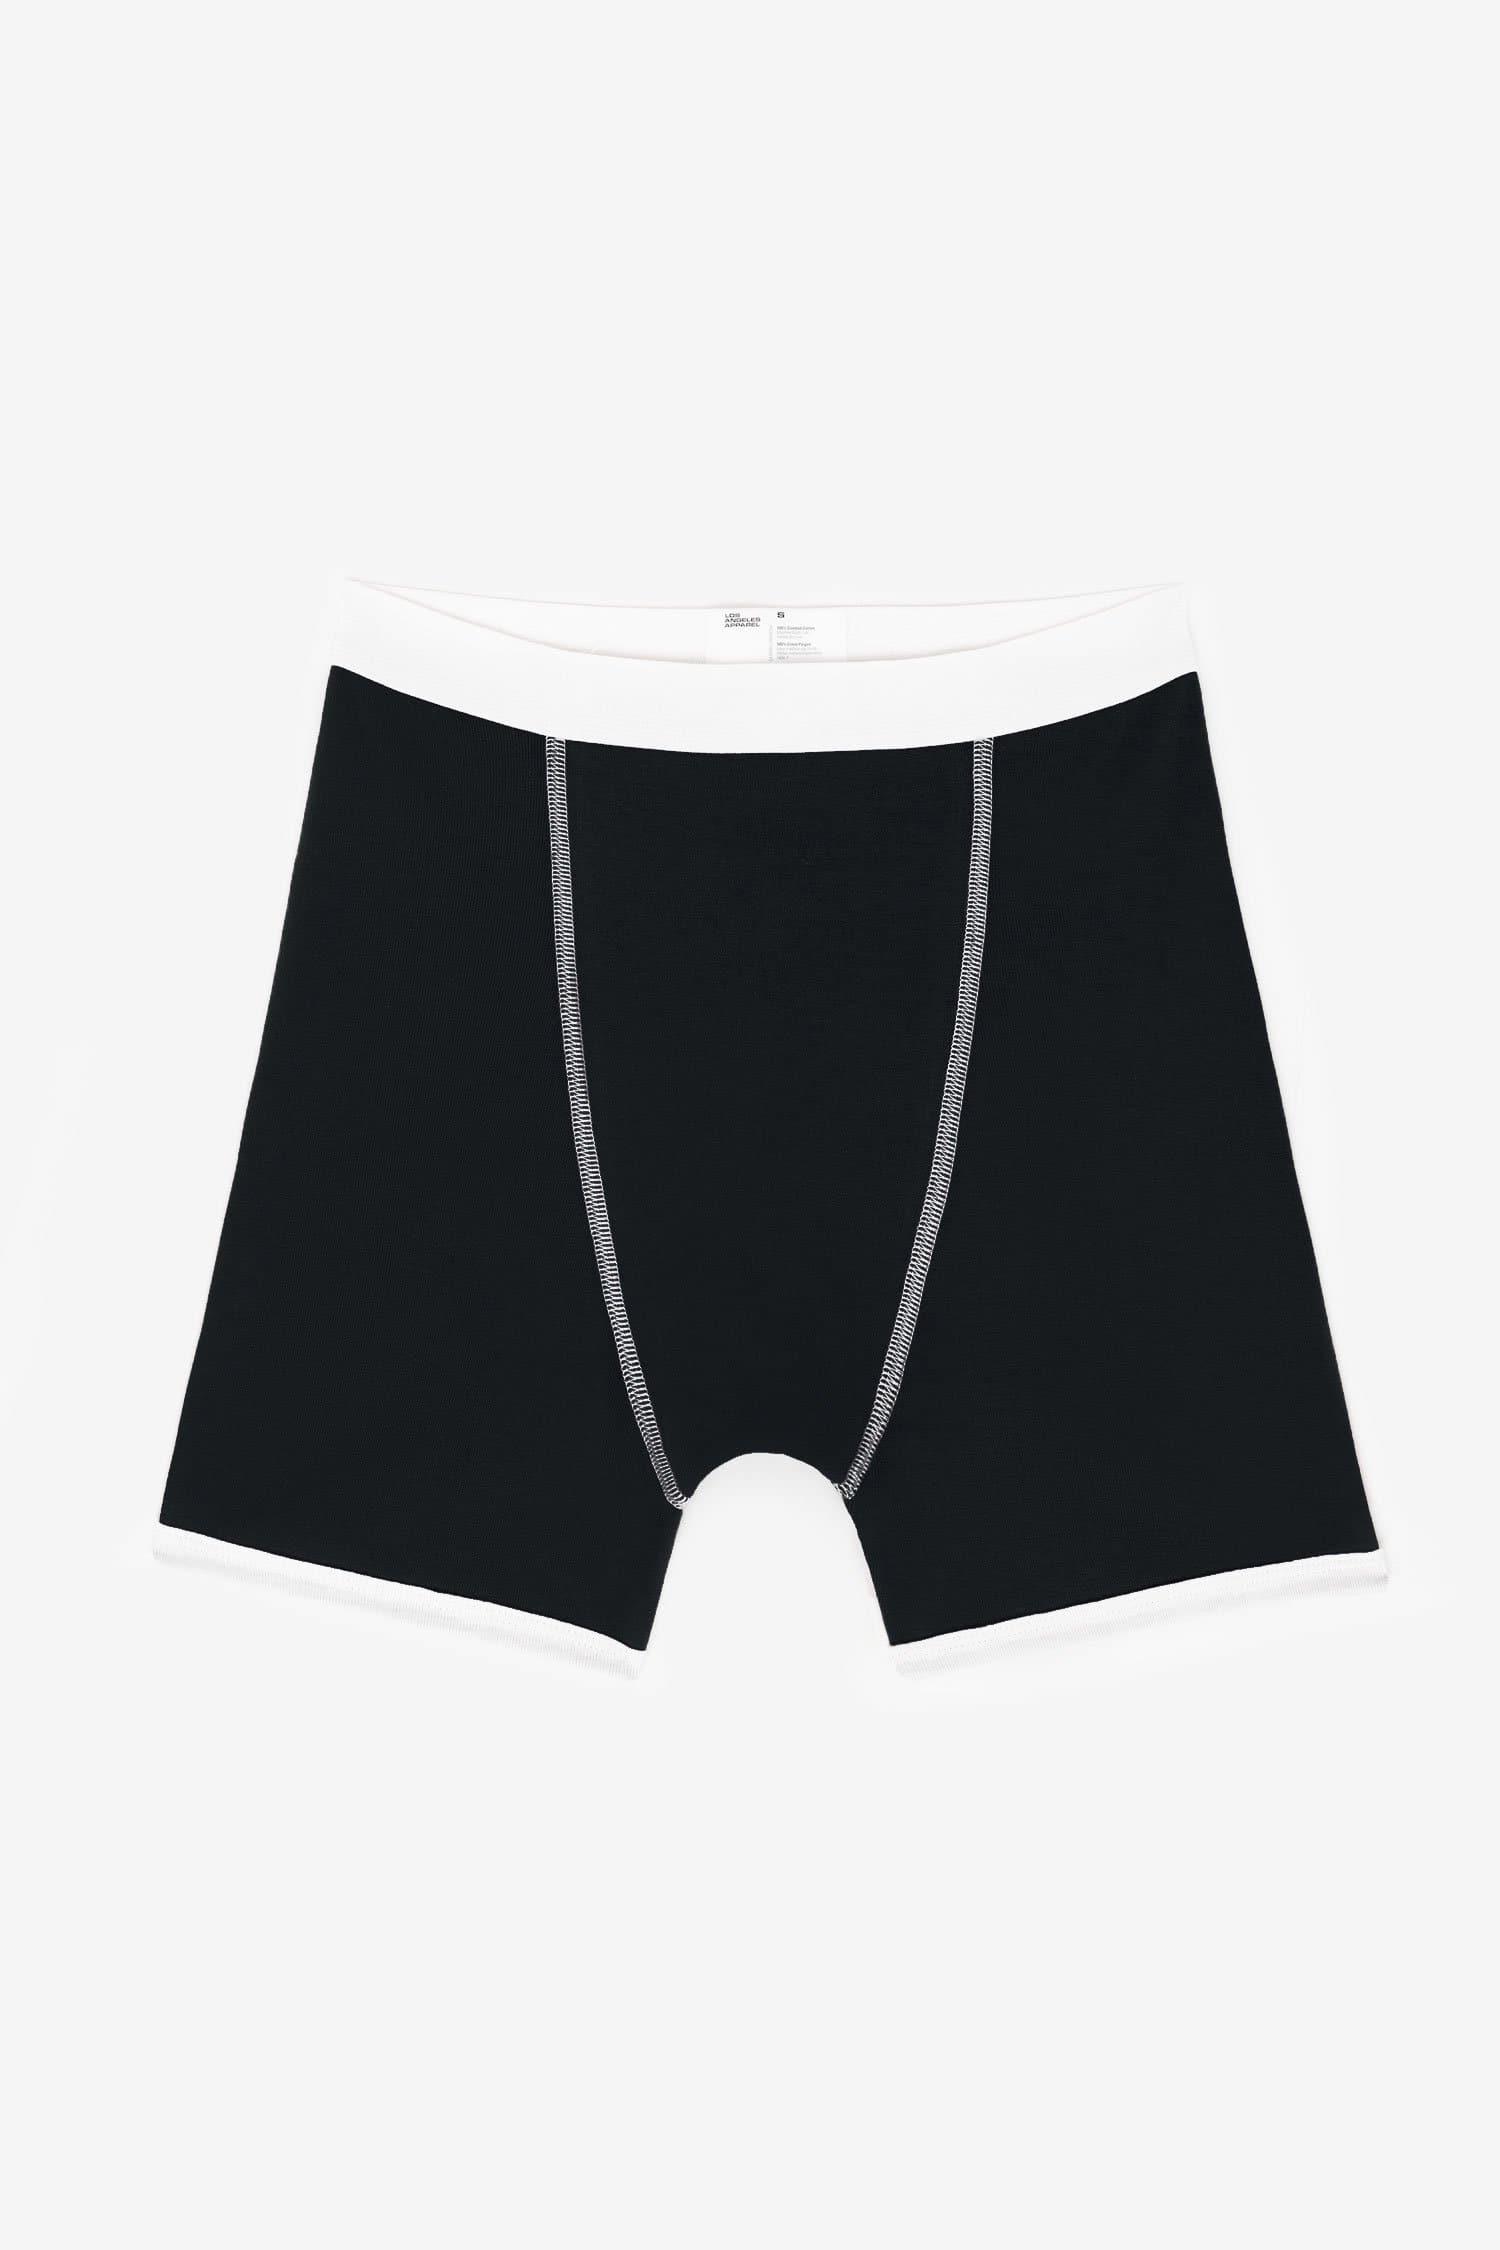 Buy women/underwear/brief Online in Seychelles at Low Prices at